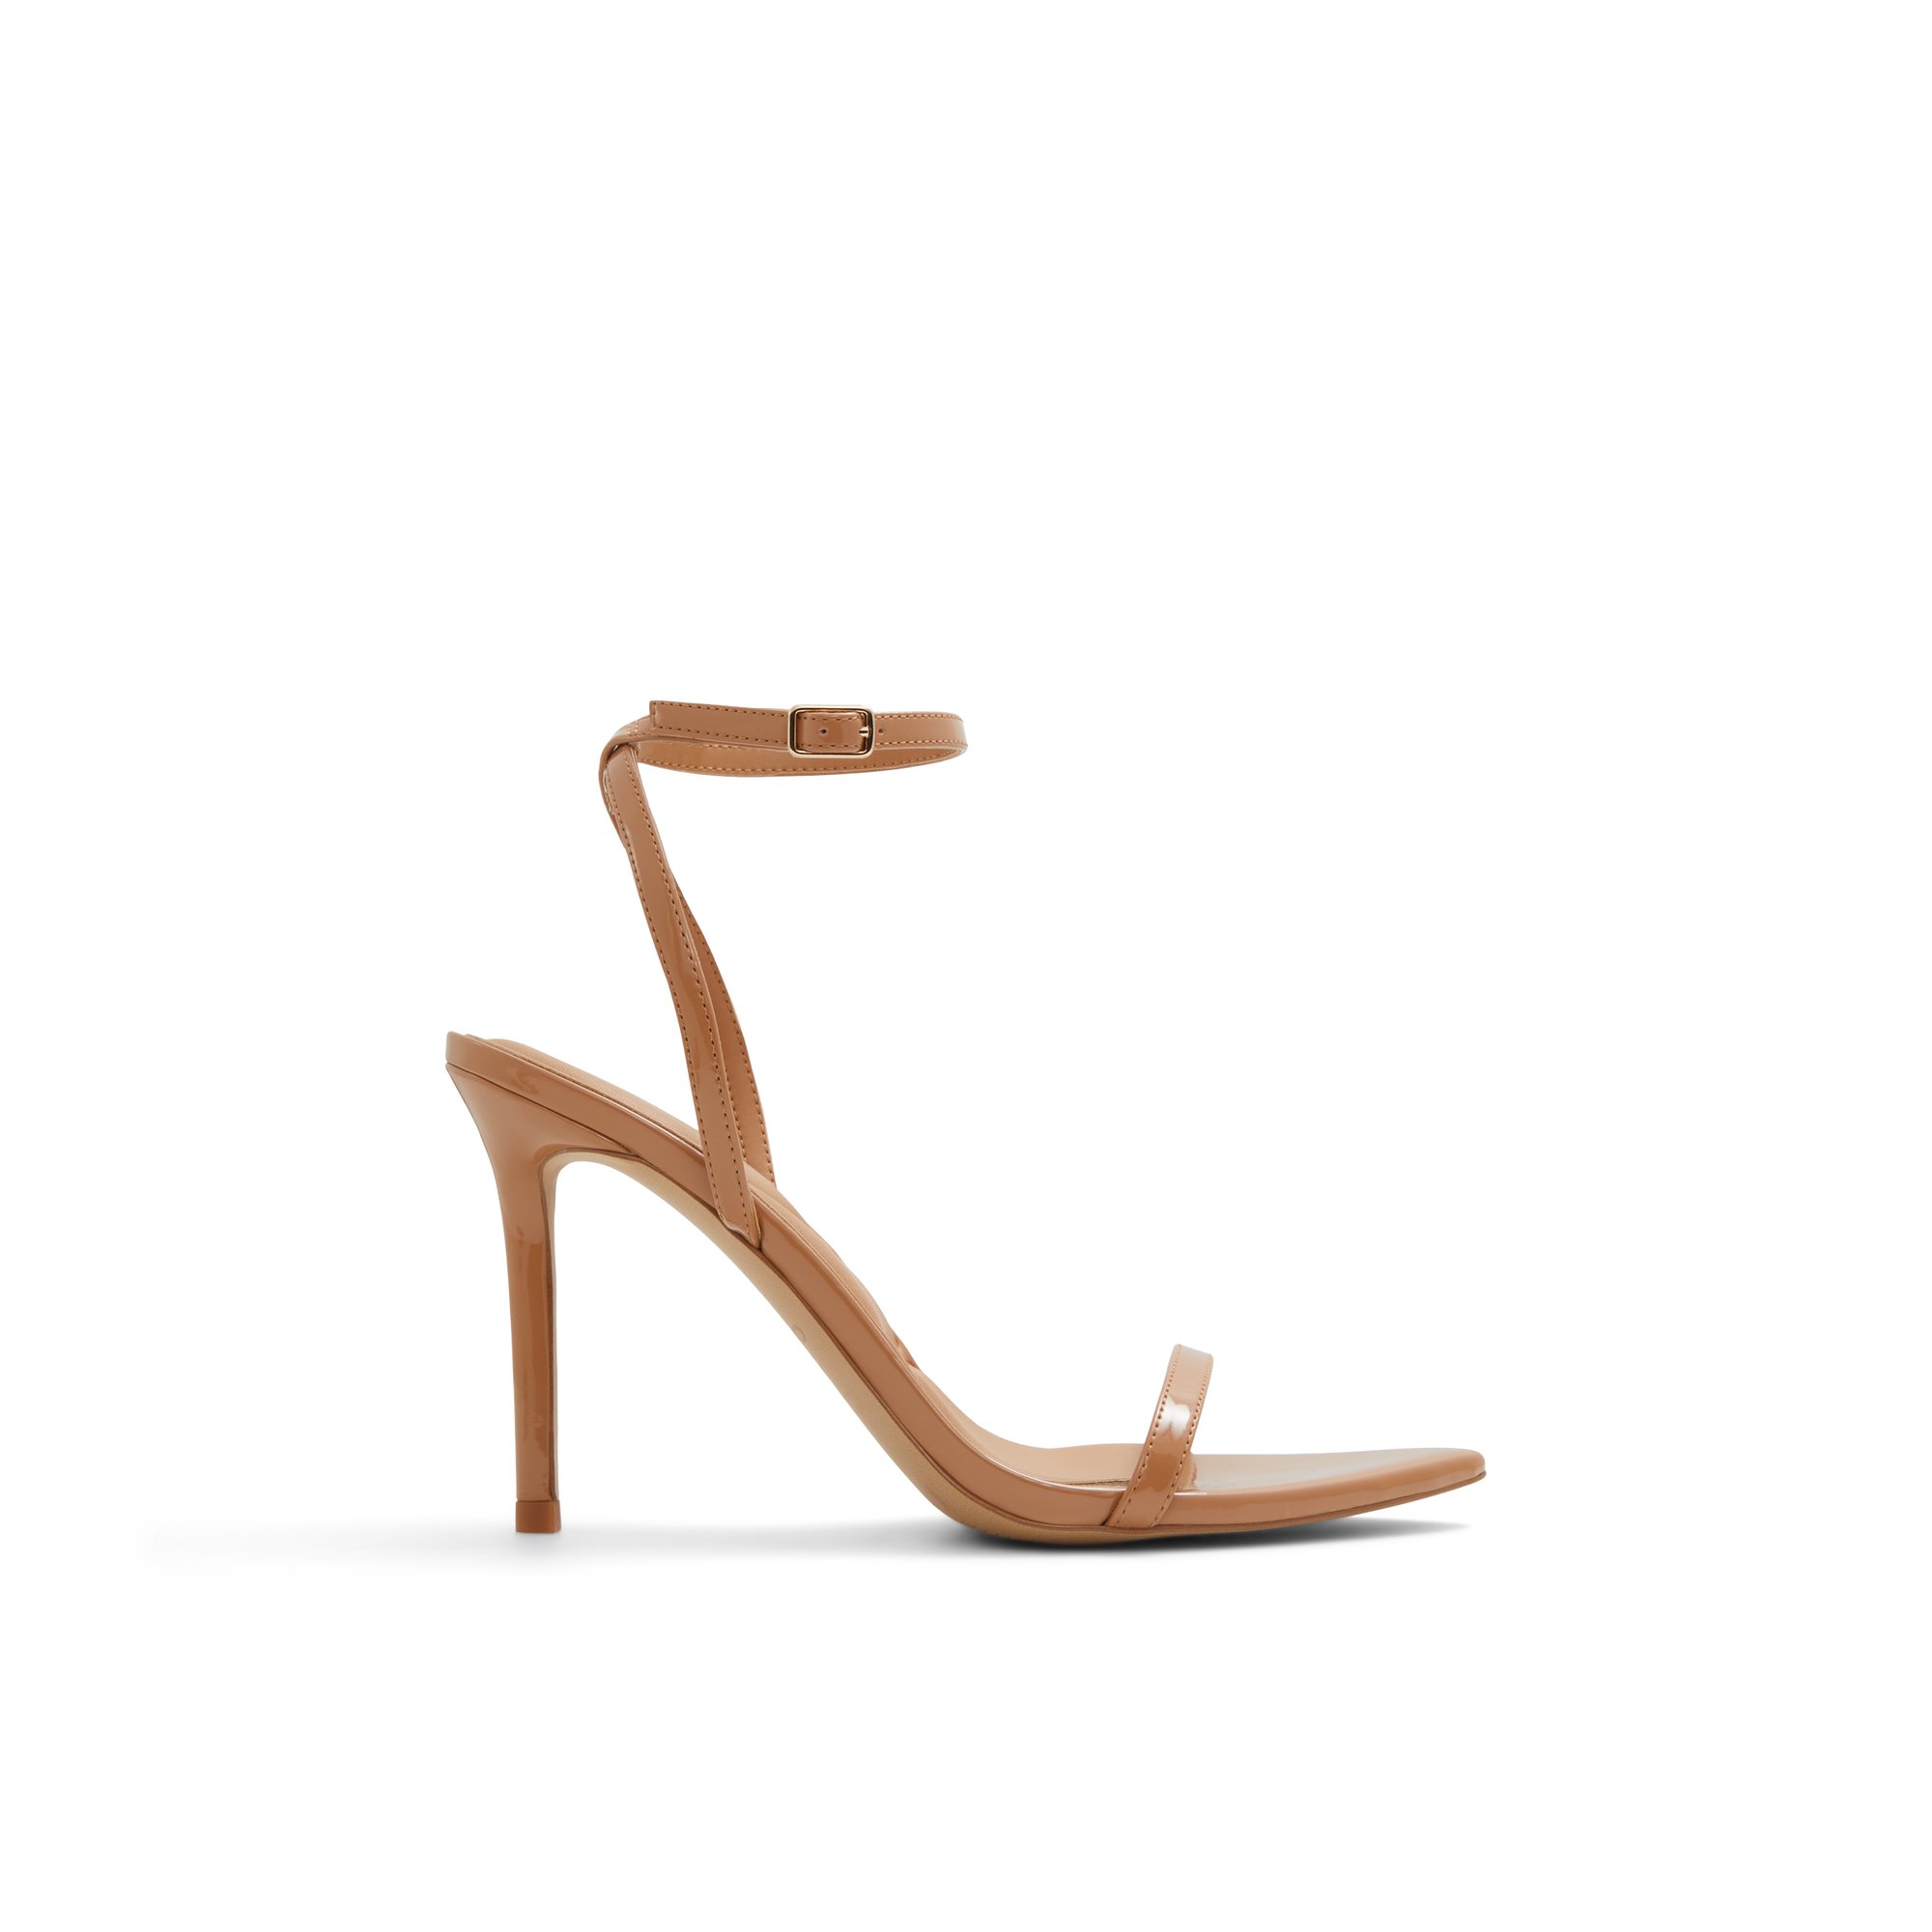 ALDO Tulipa - Women's Strappy Sandal Sandals - Beige